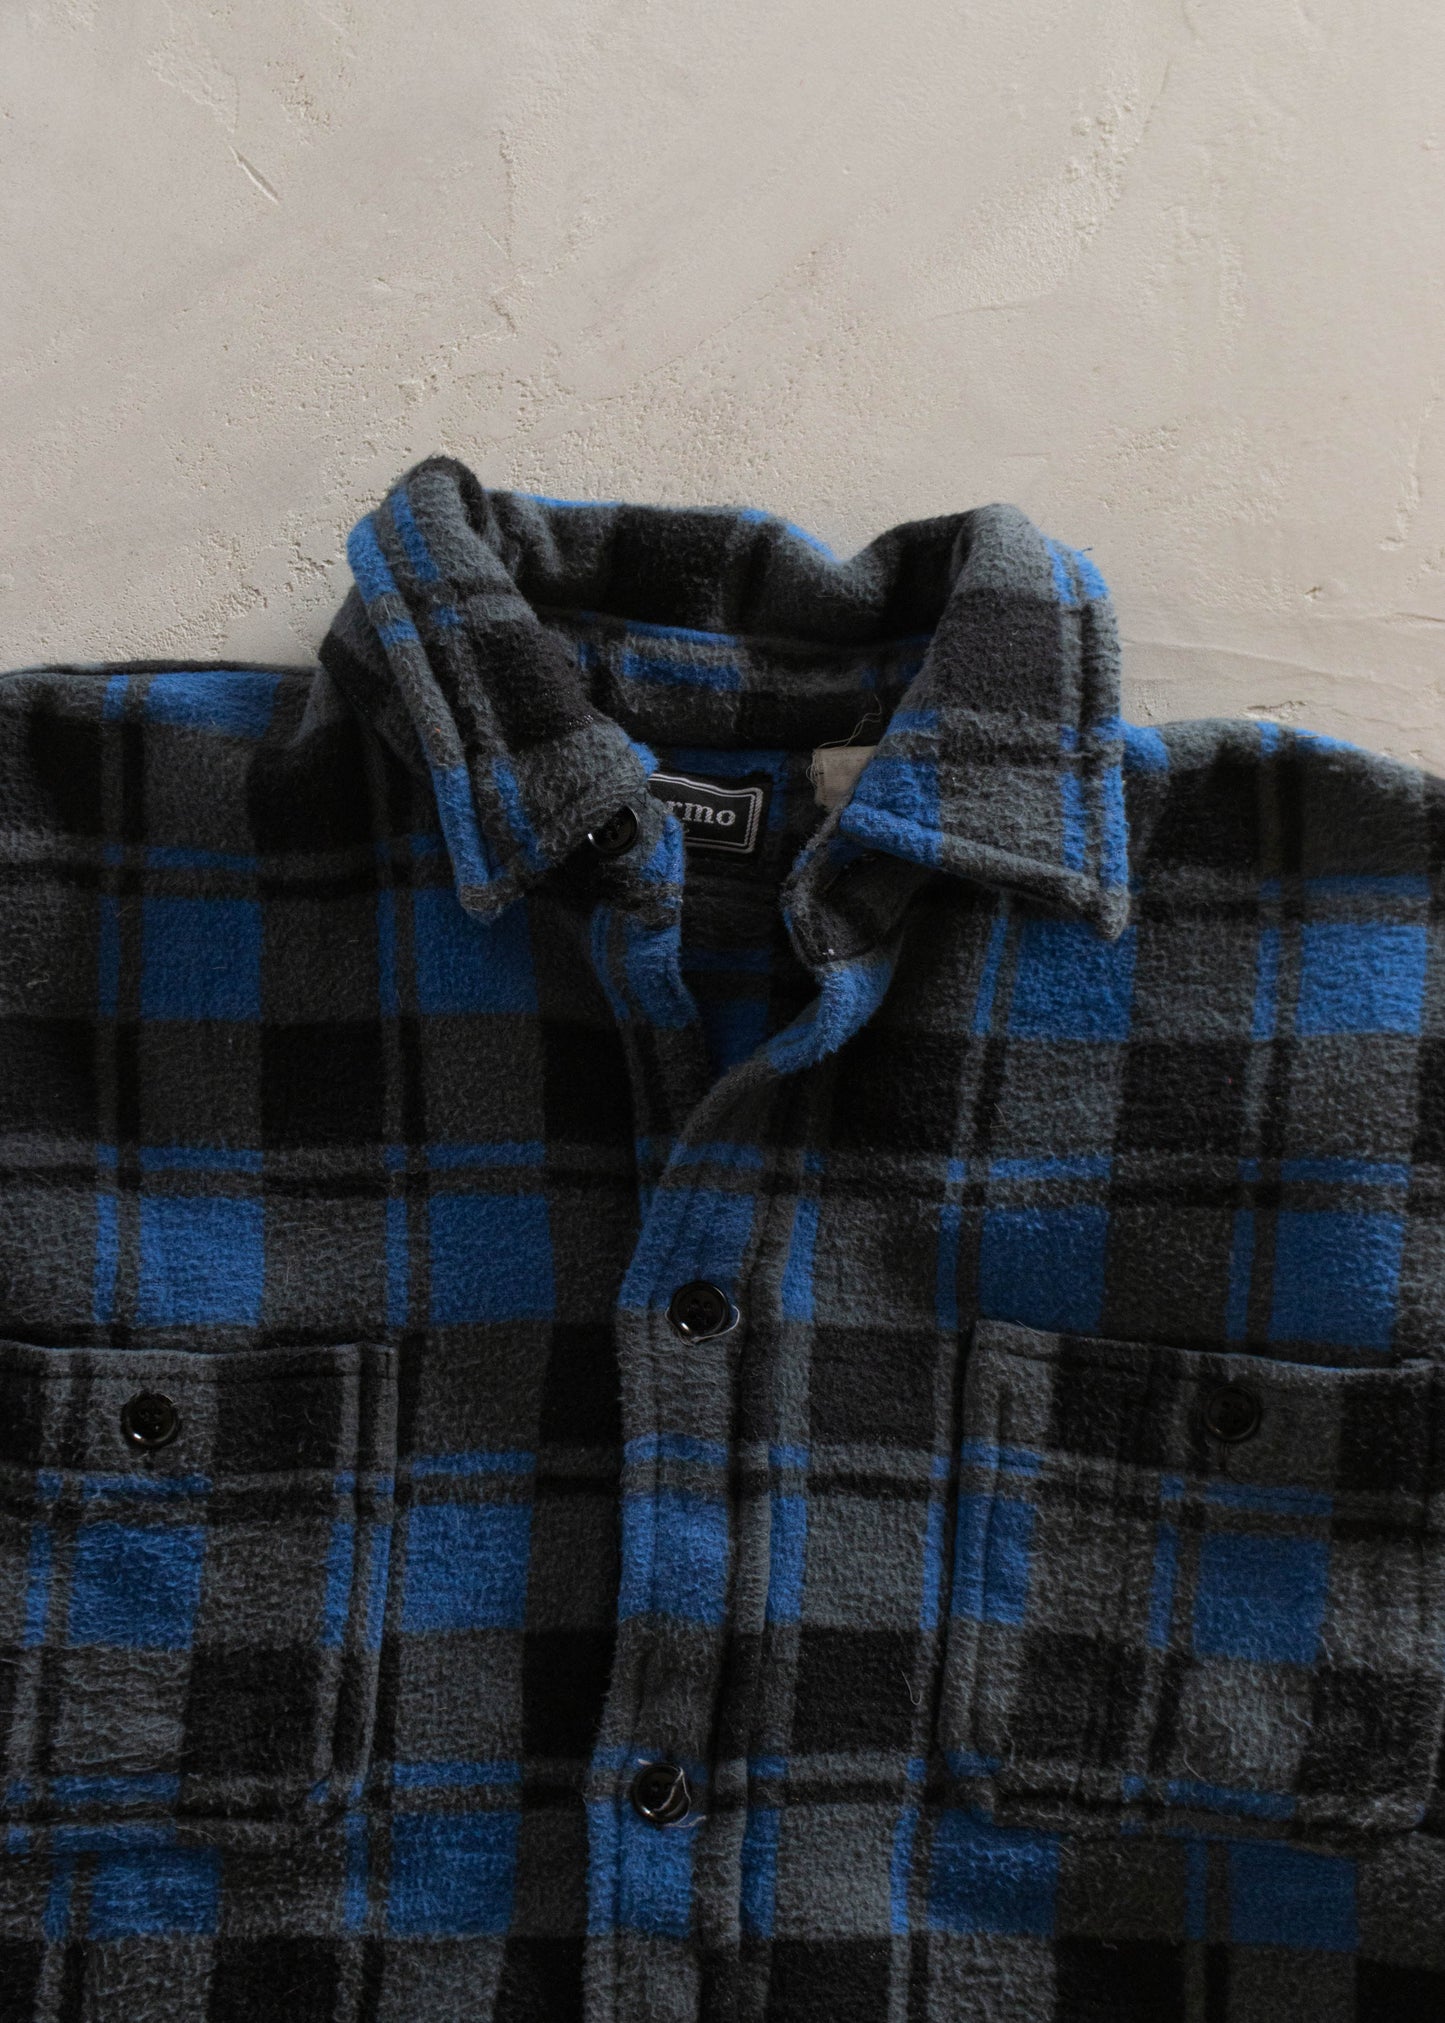 1980s Palermo Flannel Button Up Shirt Size L/XL